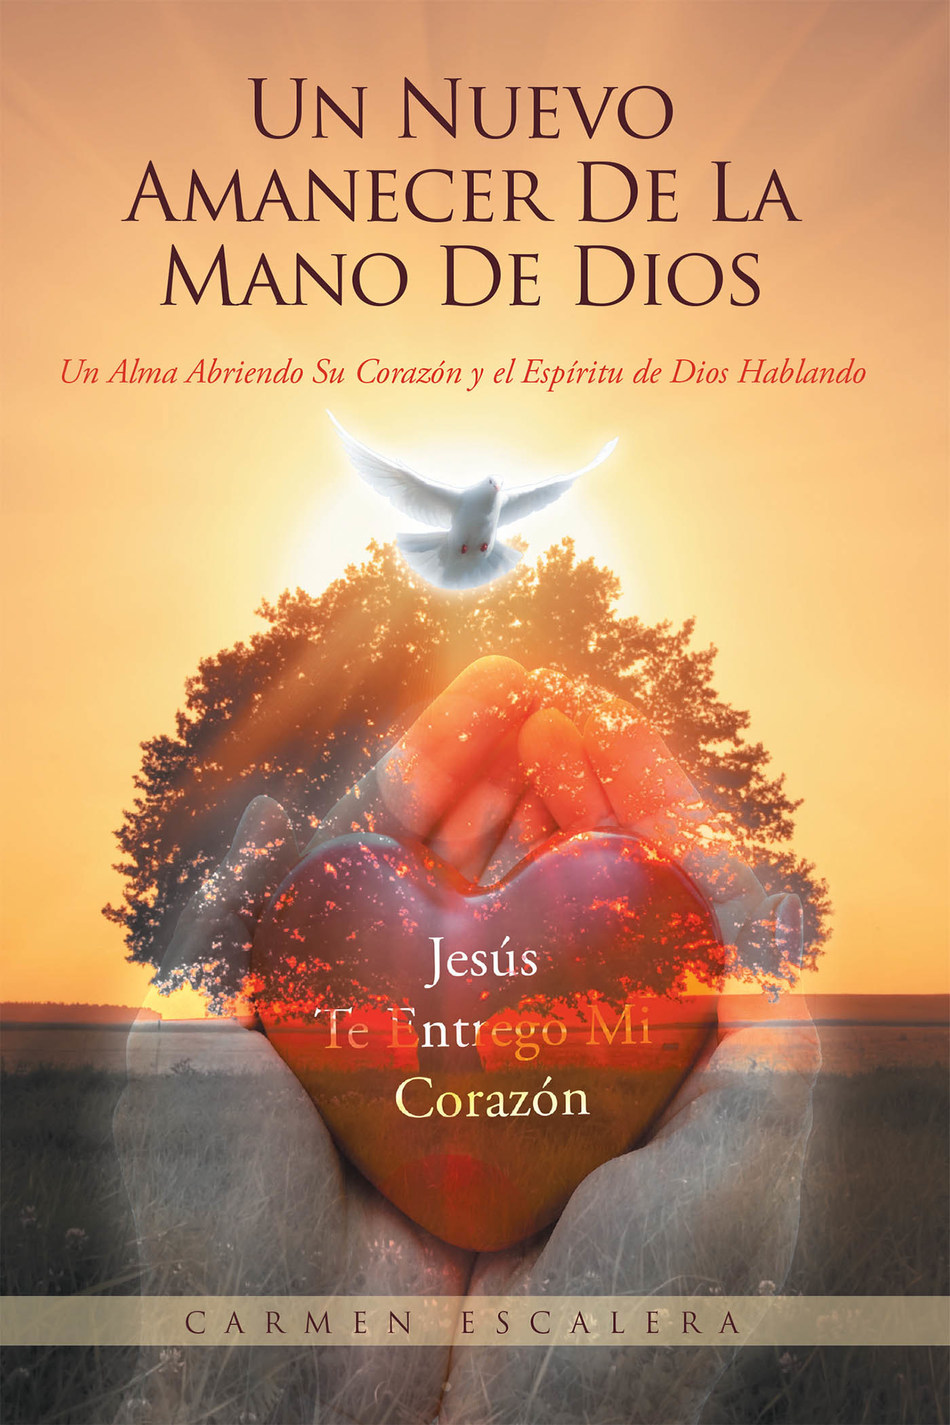 Carmen Escalera S New Book Un Nuevo Amanecer De La Man O De Dios A Memoir Of The Author S Healing From Illness And Her Devotion To The Lord